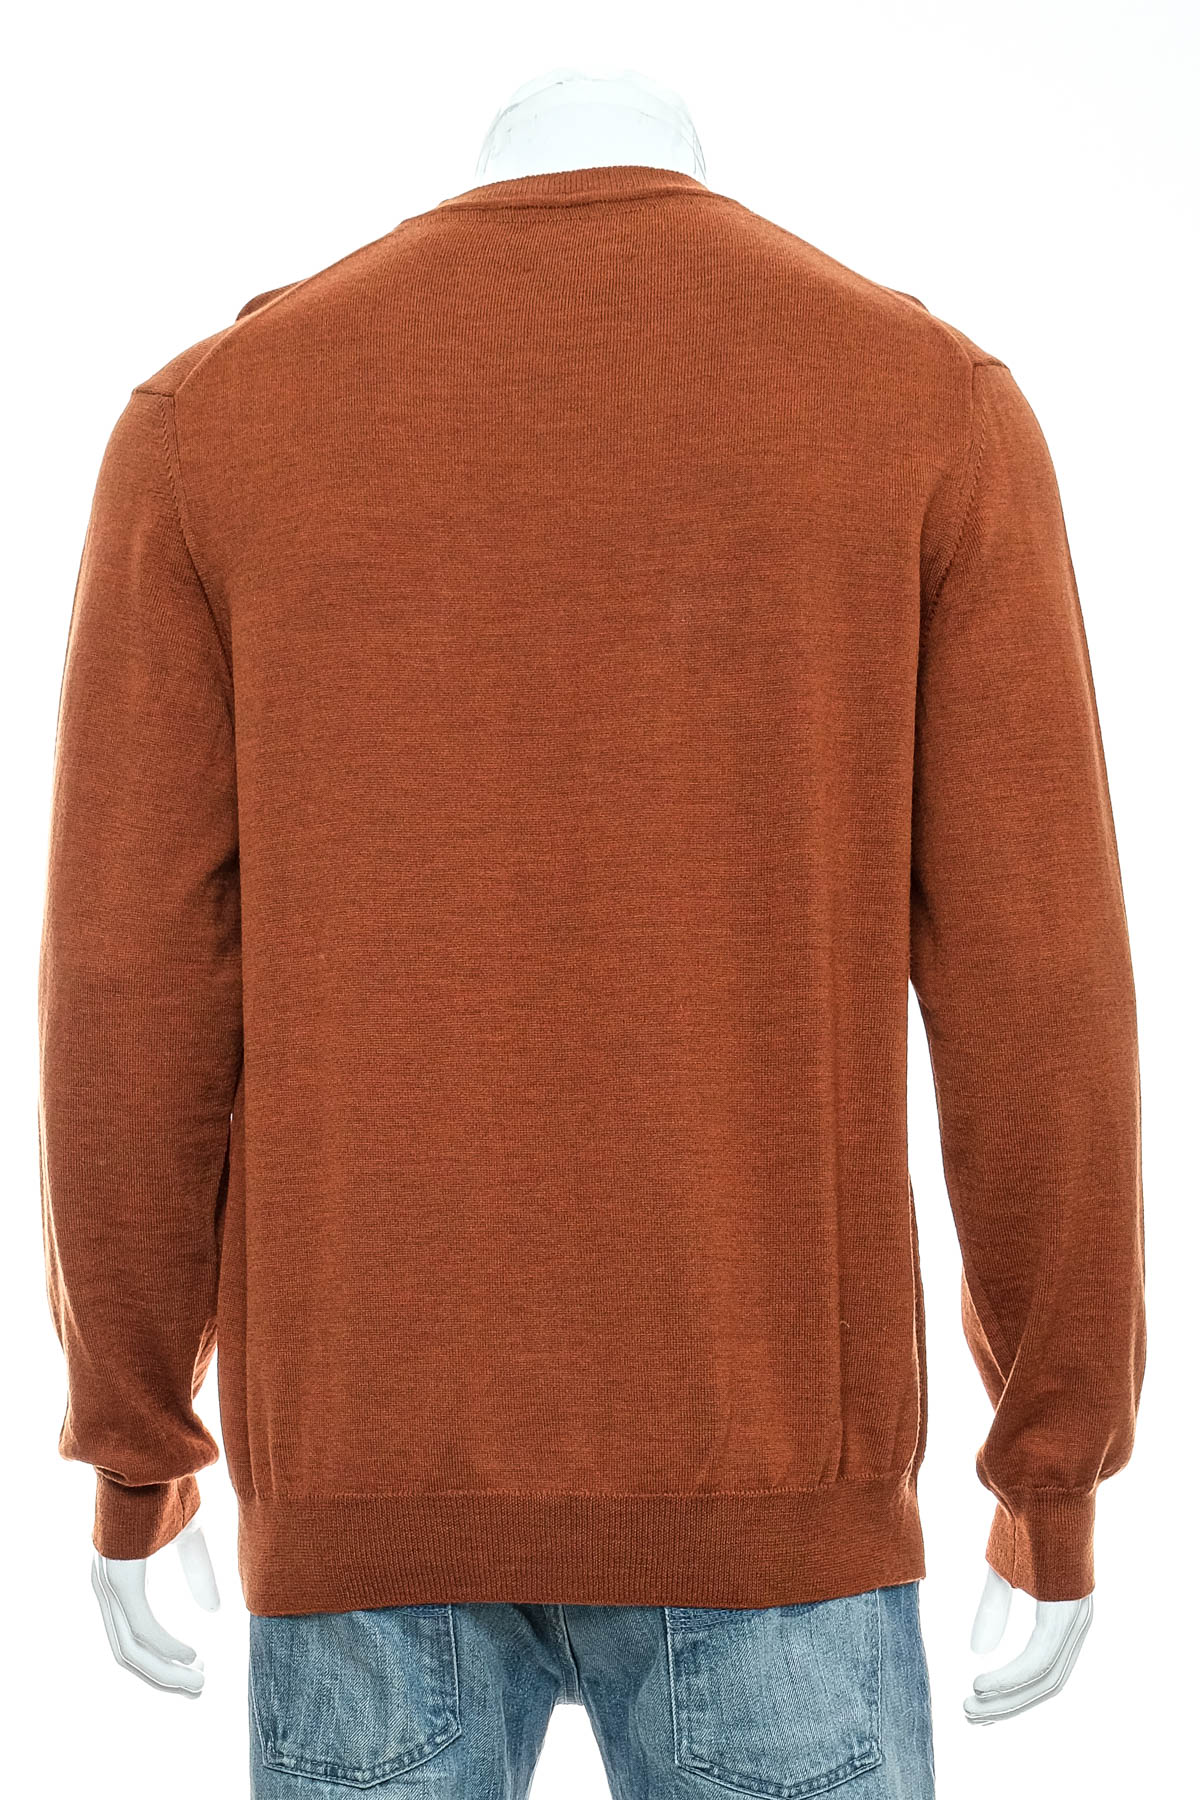 Men's sweater - Black Brown - 1